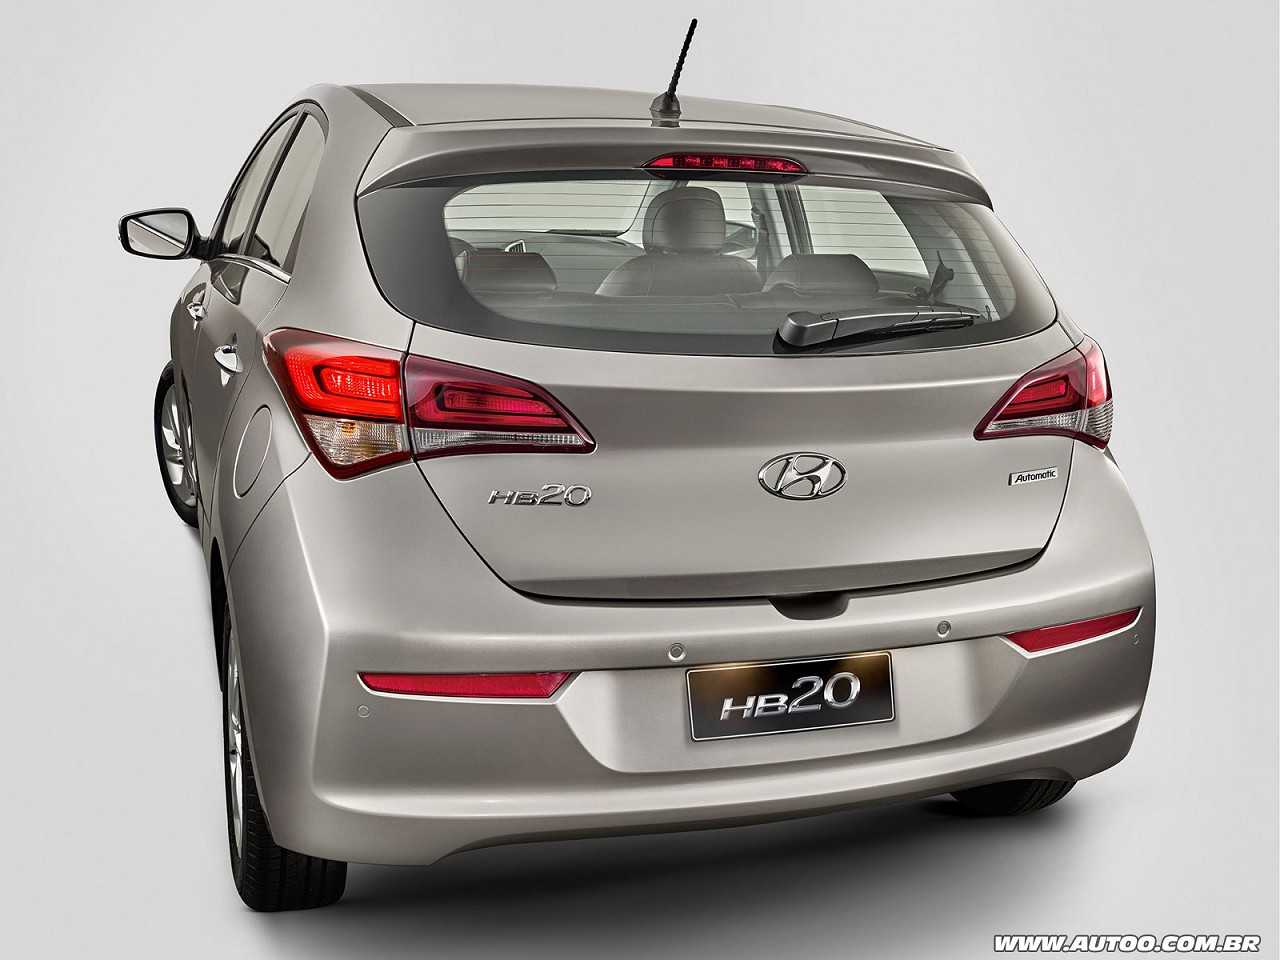 Compra PCD: Honda Fit Personal ou um Hyundai HB20 Premium